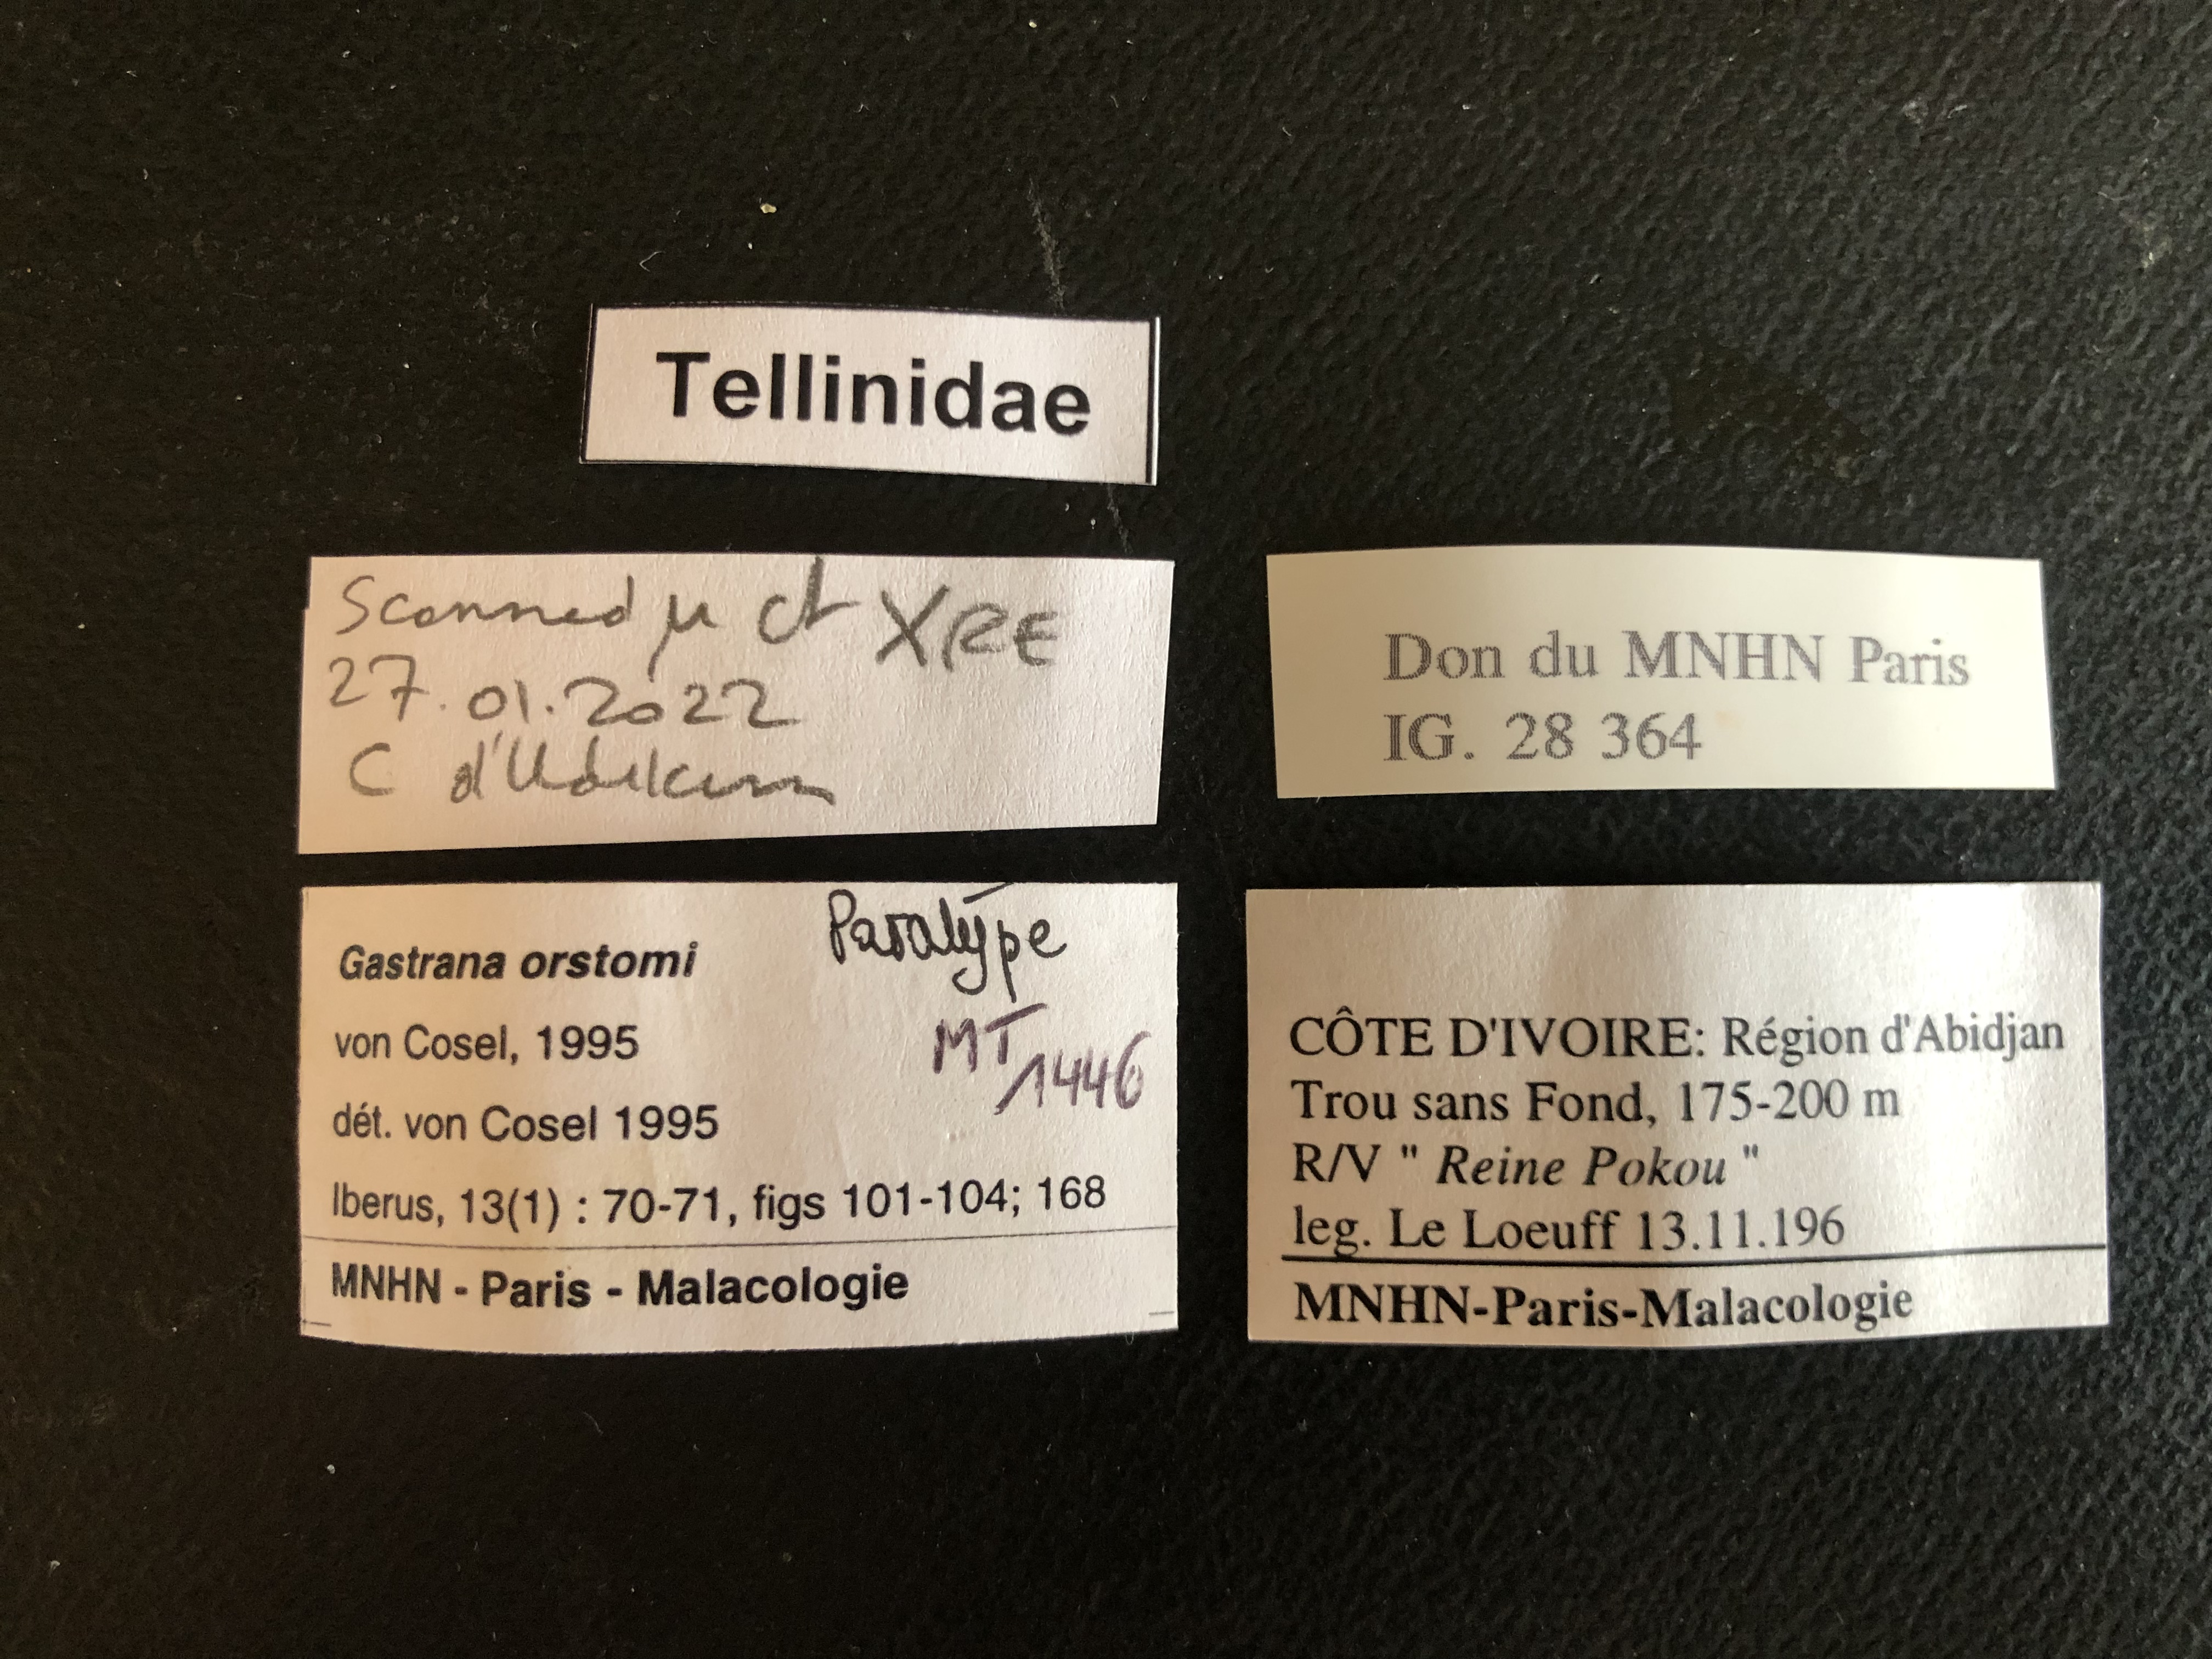 MT 1446 Gastrana orstomi Labels